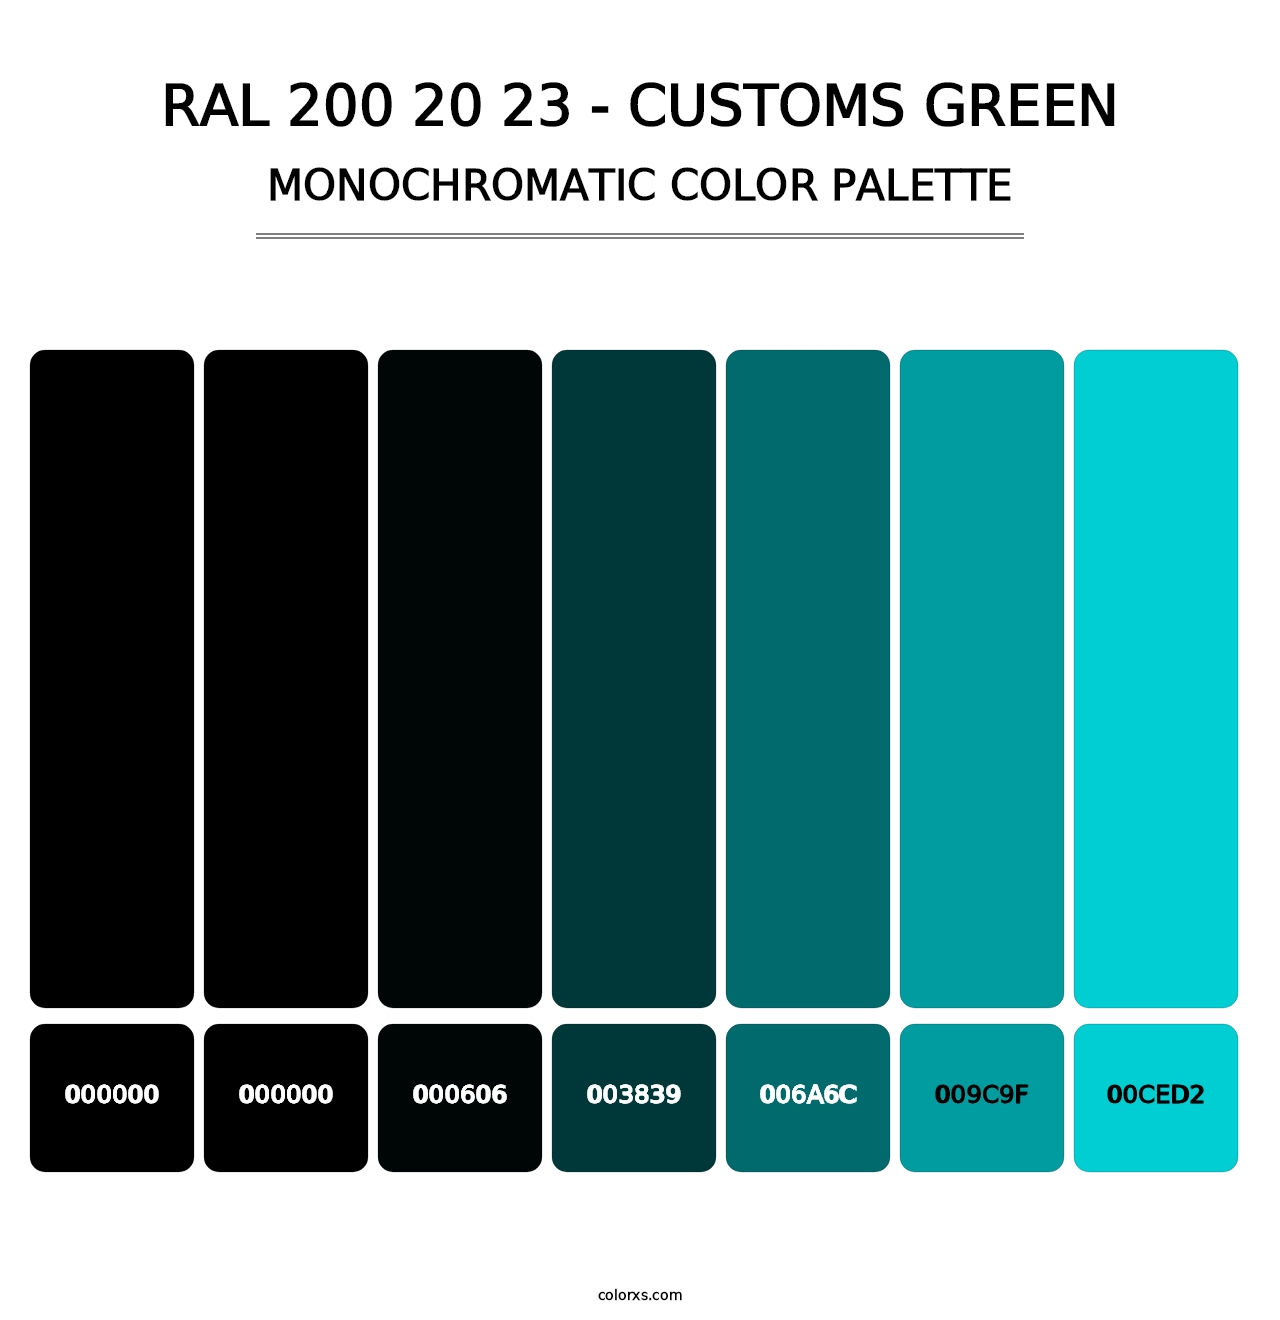 RAL 200 20 23 - Customs Green - Monochromatic Color Palette